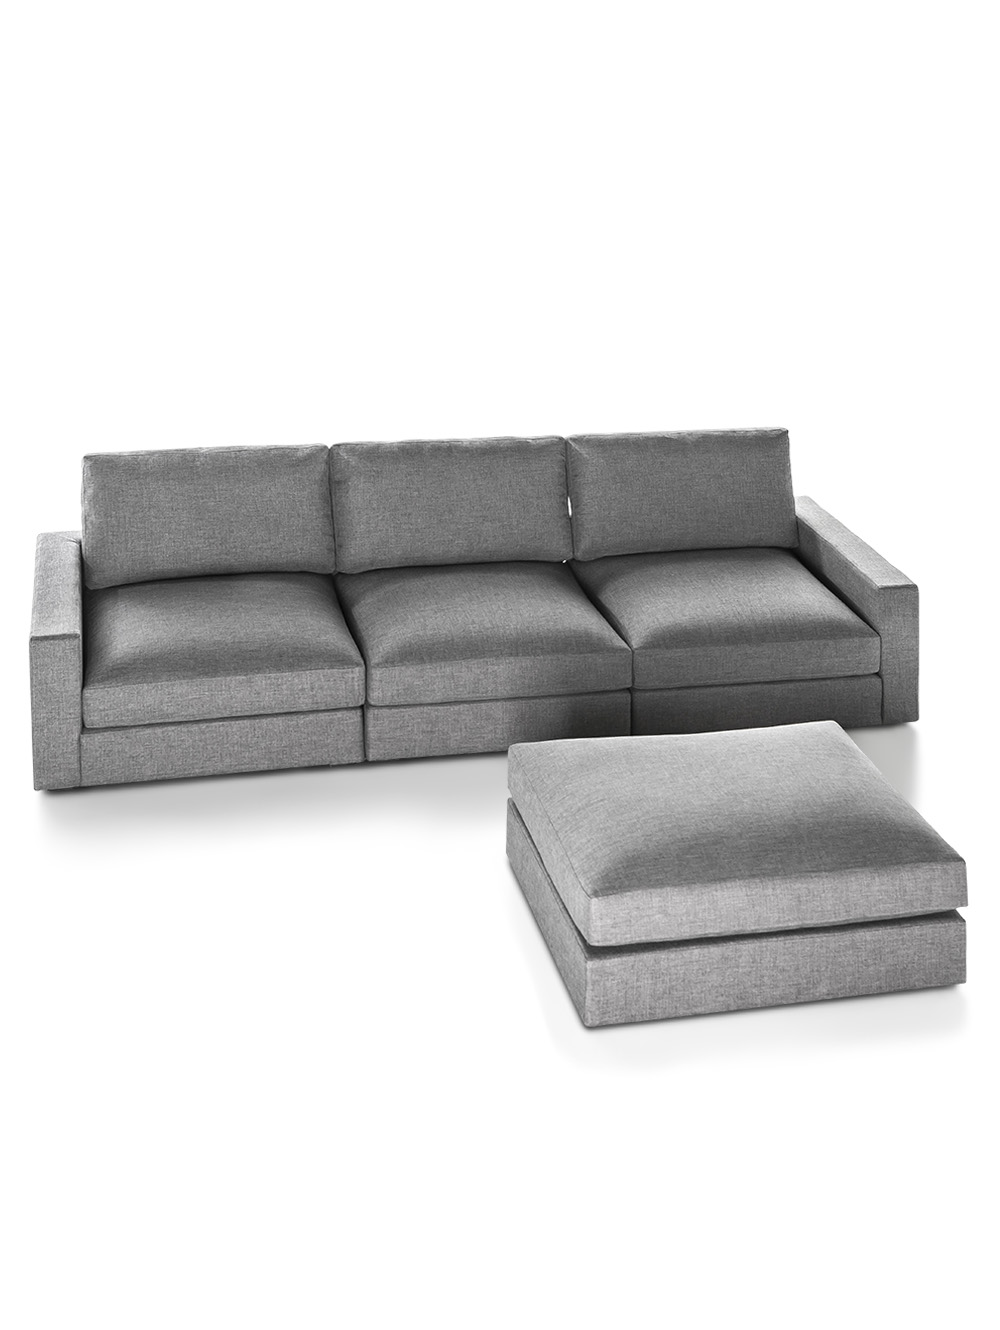 Sofa en ele gris oscuro-SOFA BELMONT SPAZIO PETROLEO-Landmark-8.jpg image number null